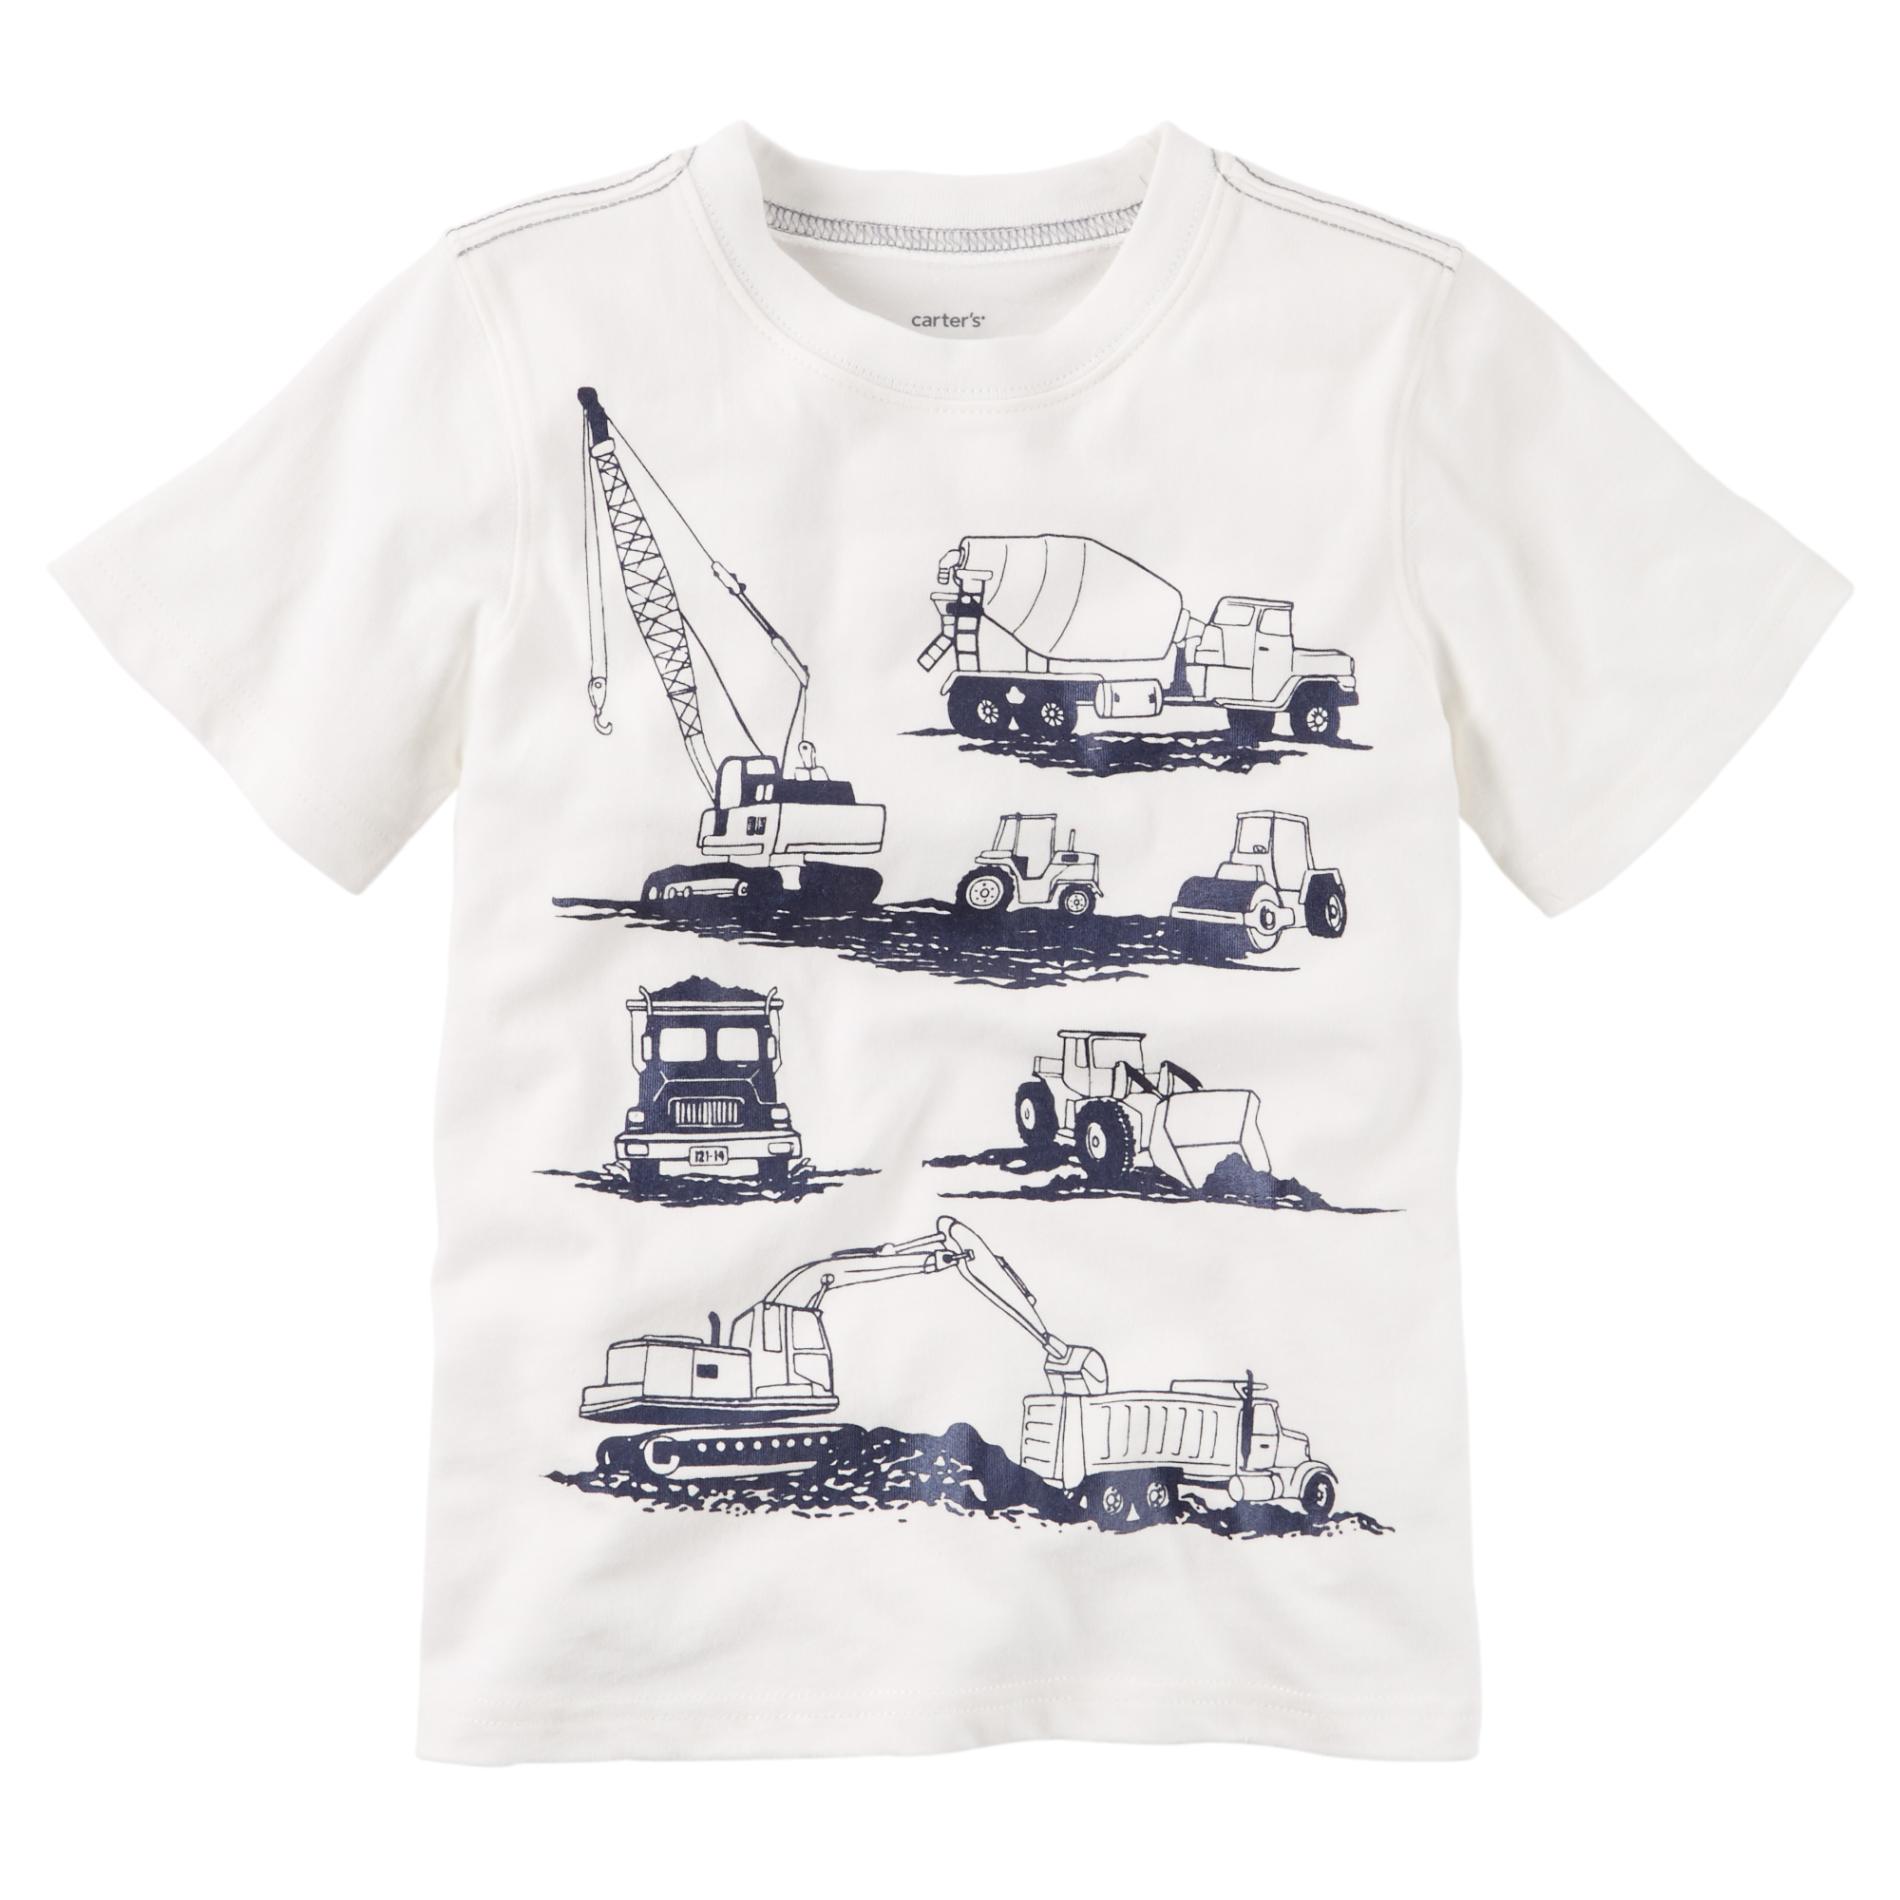 Carter's Boy's Graphic T-Shirt - Construction